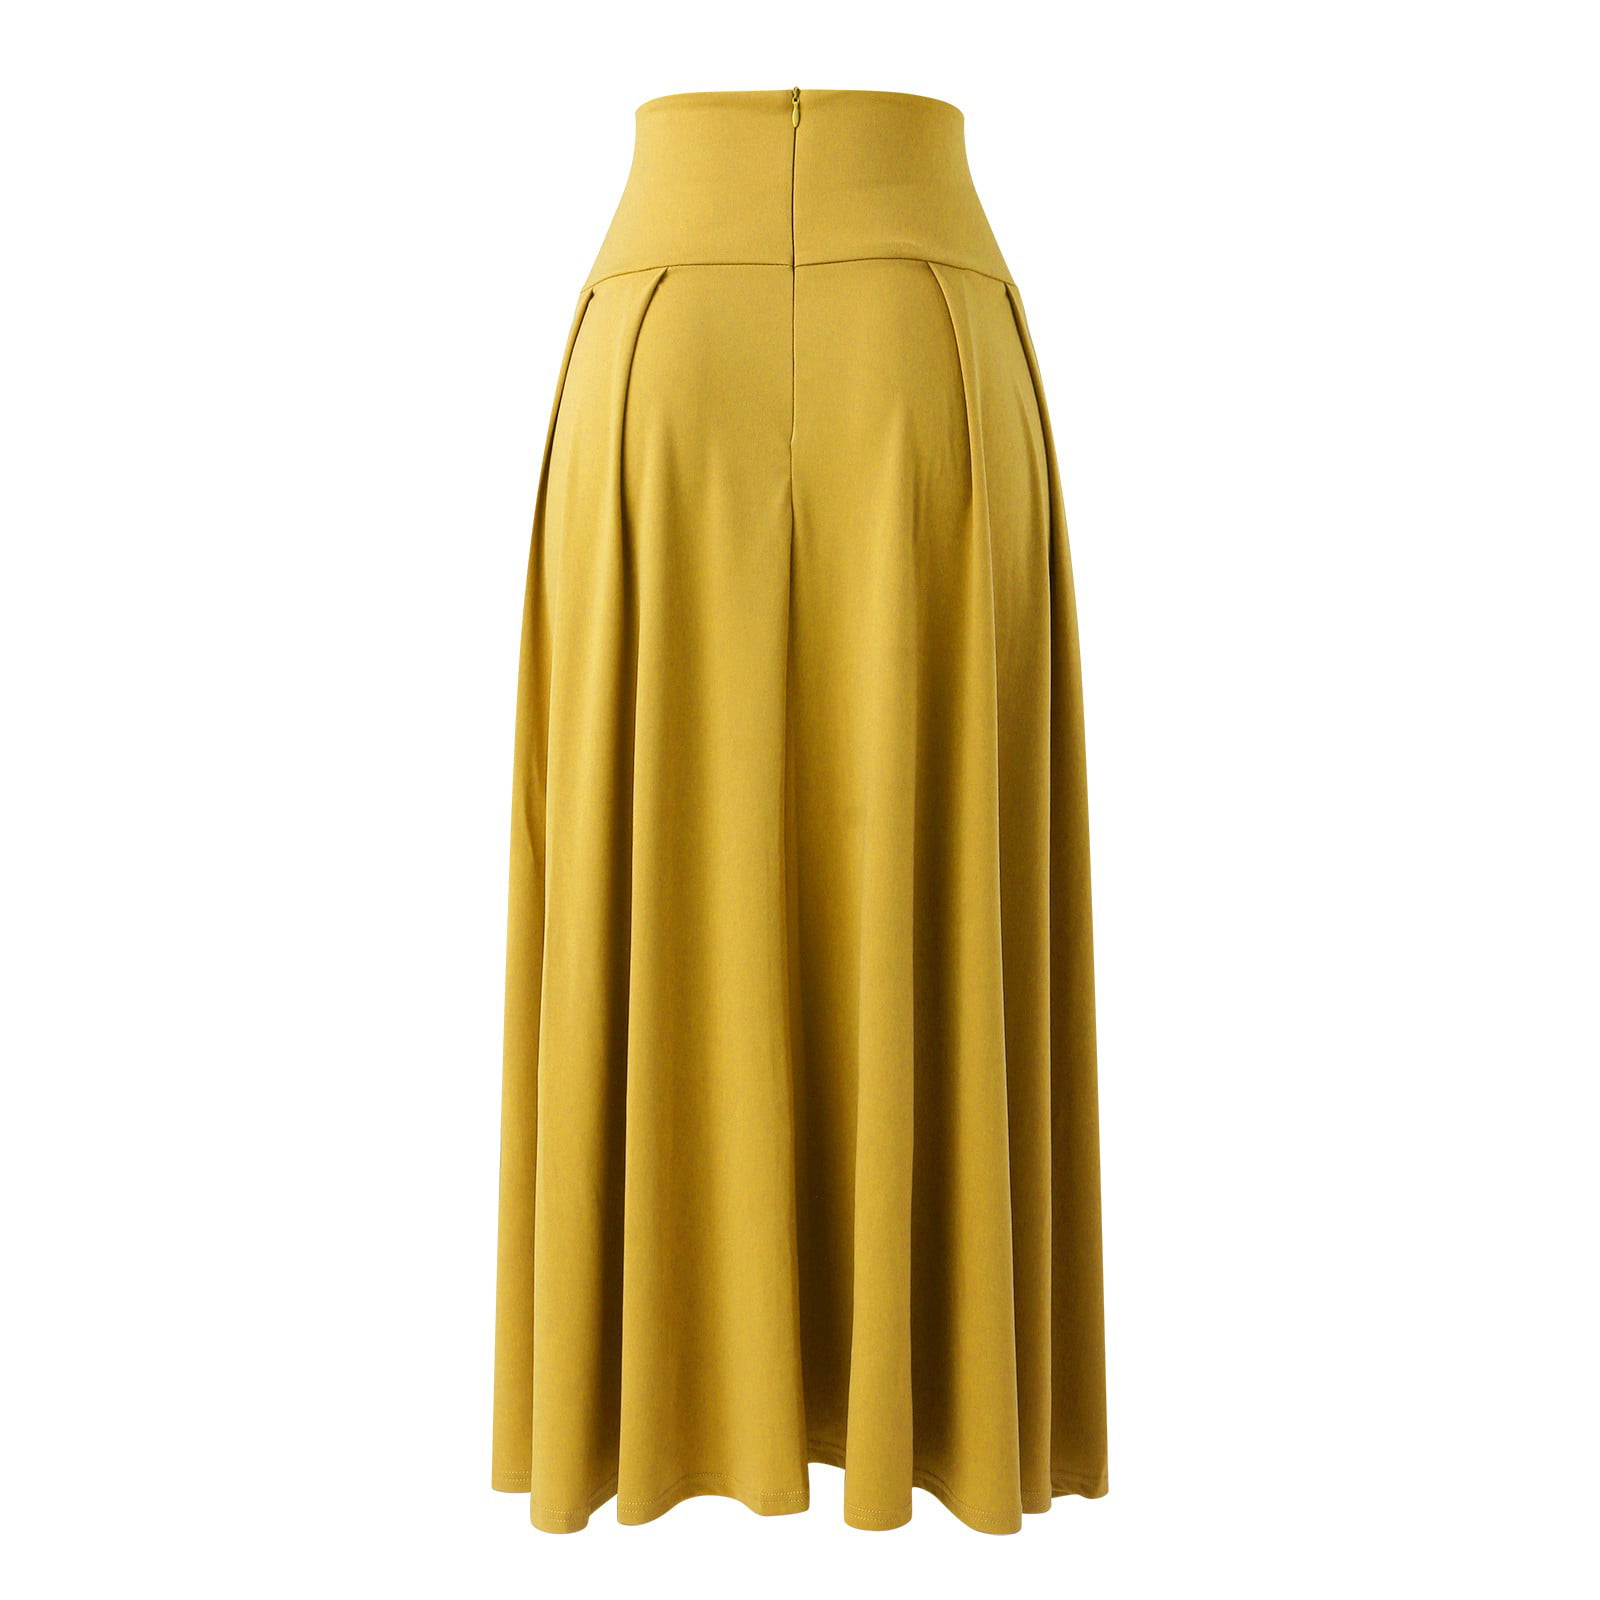 eczipvz Fringe Skirt Women Fashion Print SKirt Pocket Elastic Waist ...